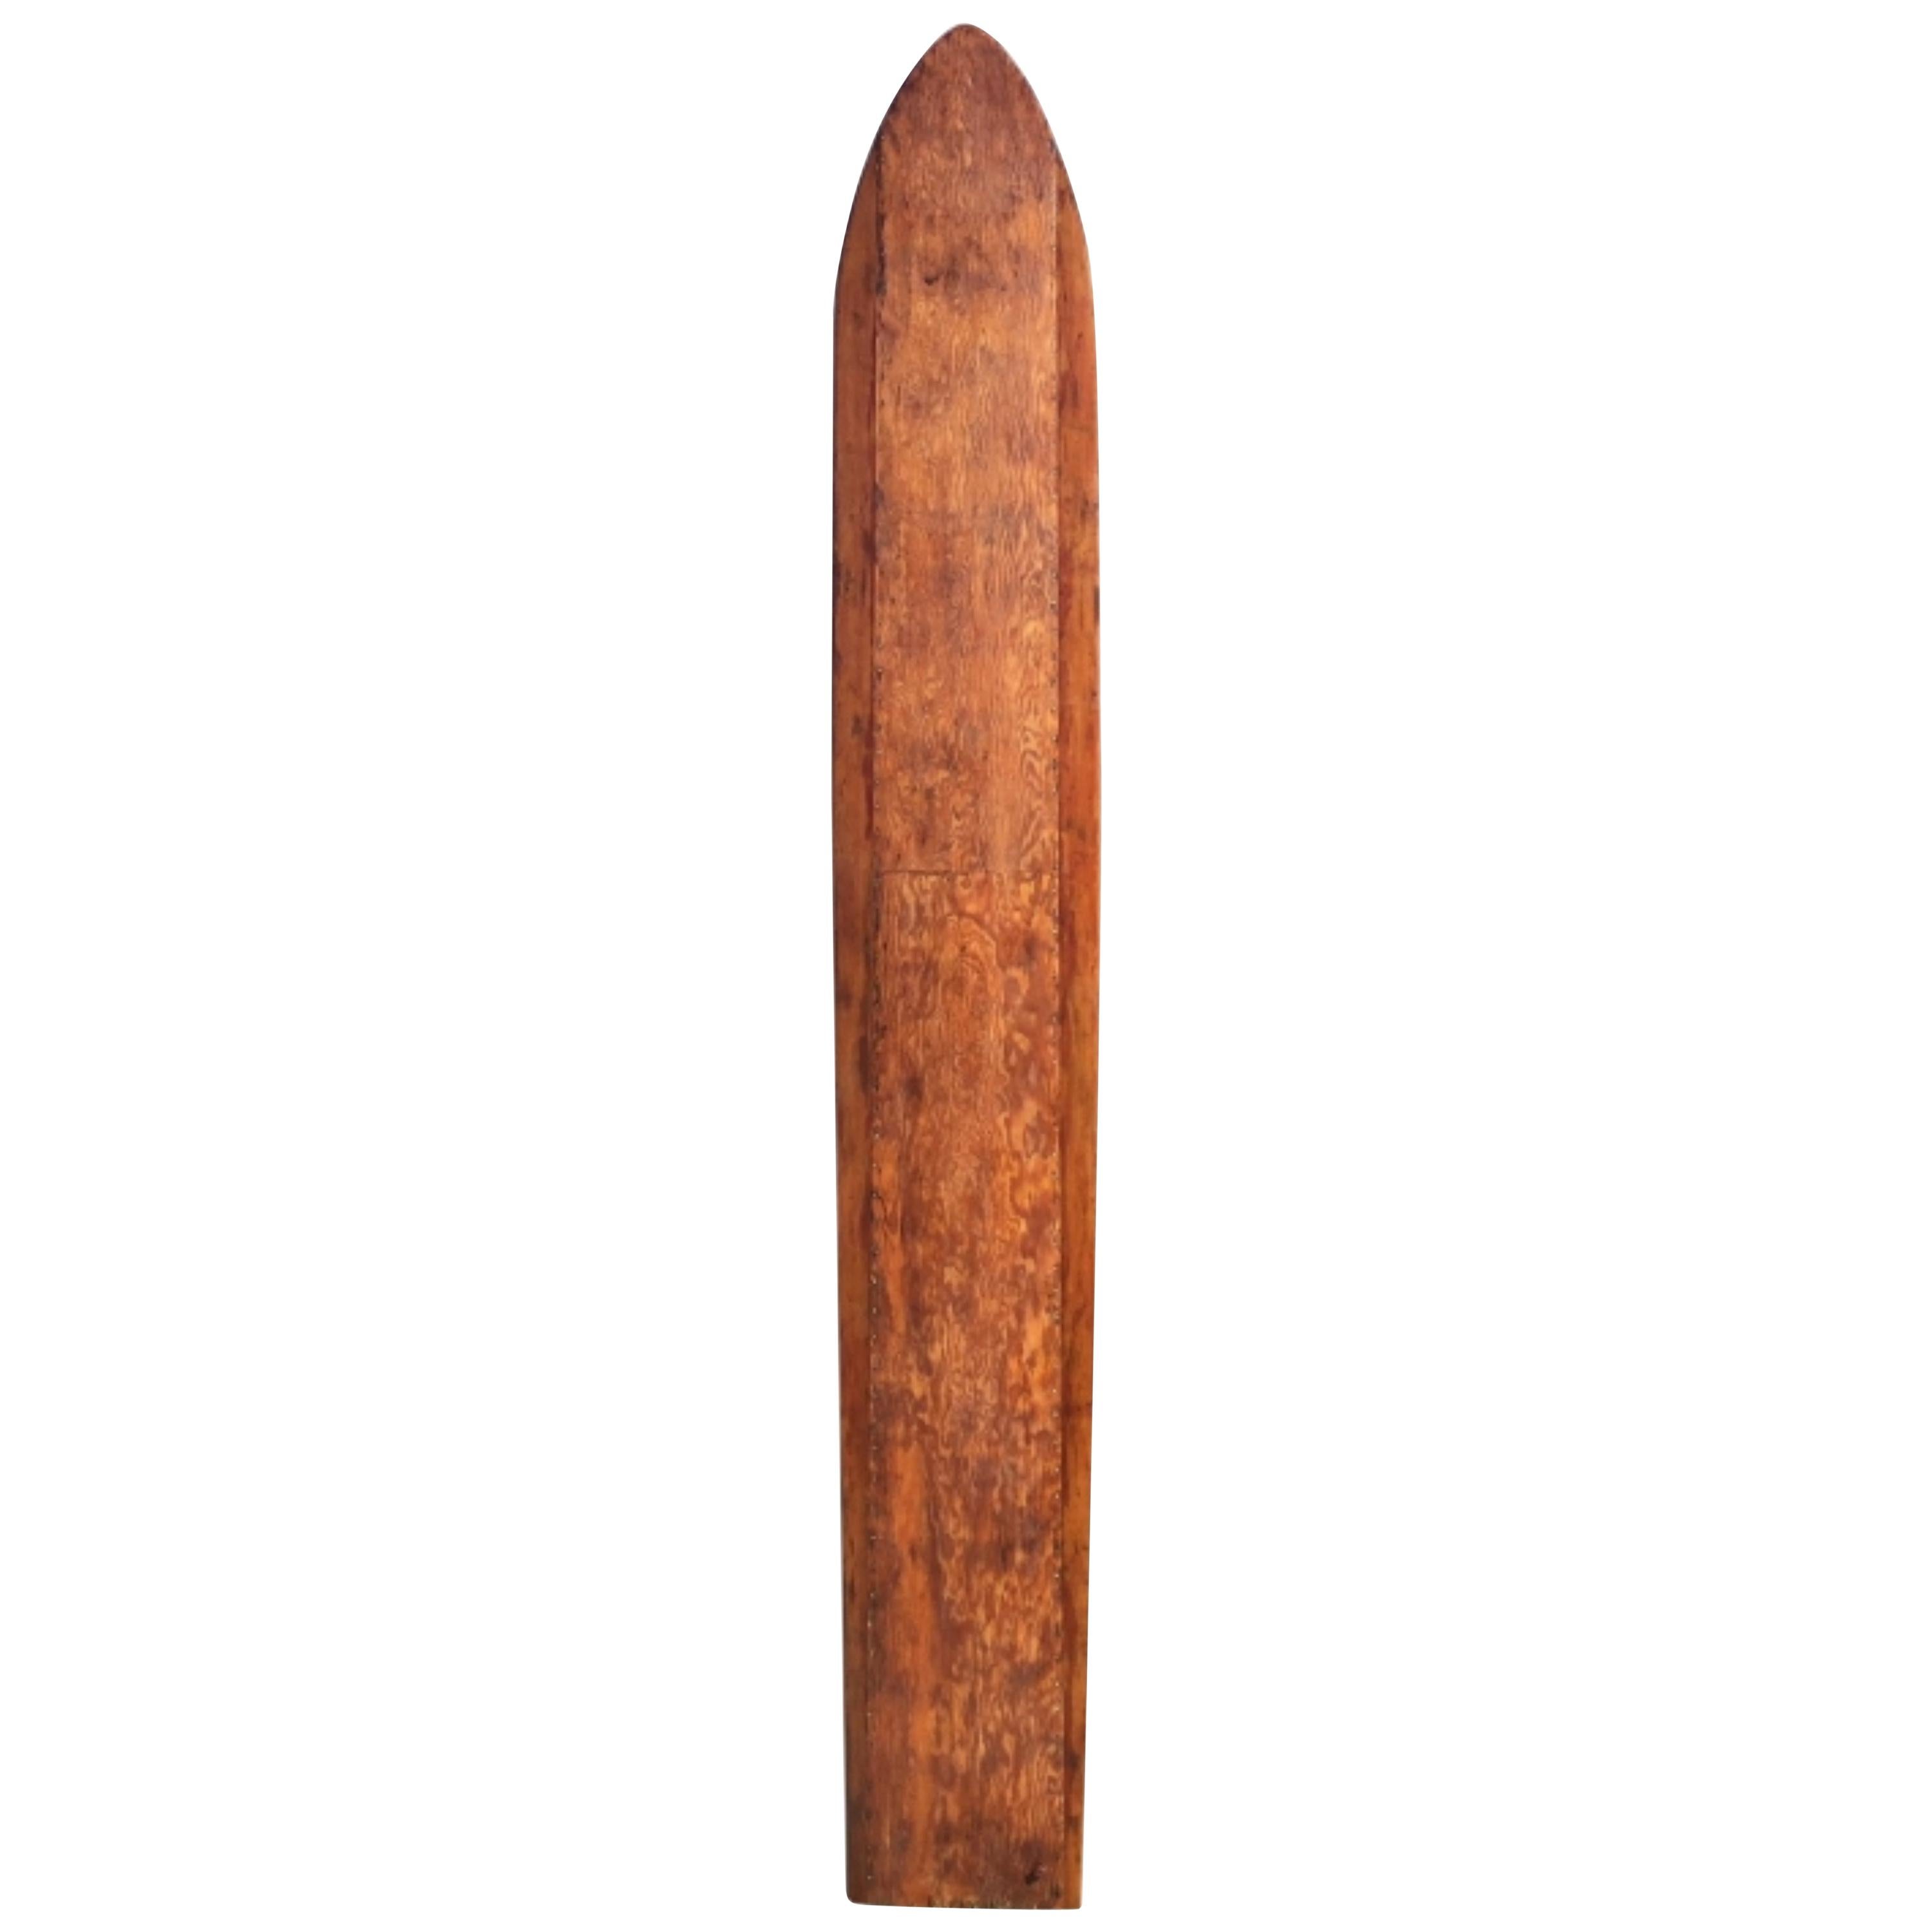 Mid-late 1930s Phillip “Flippy” Hoffman Personal Wooden Surfboard